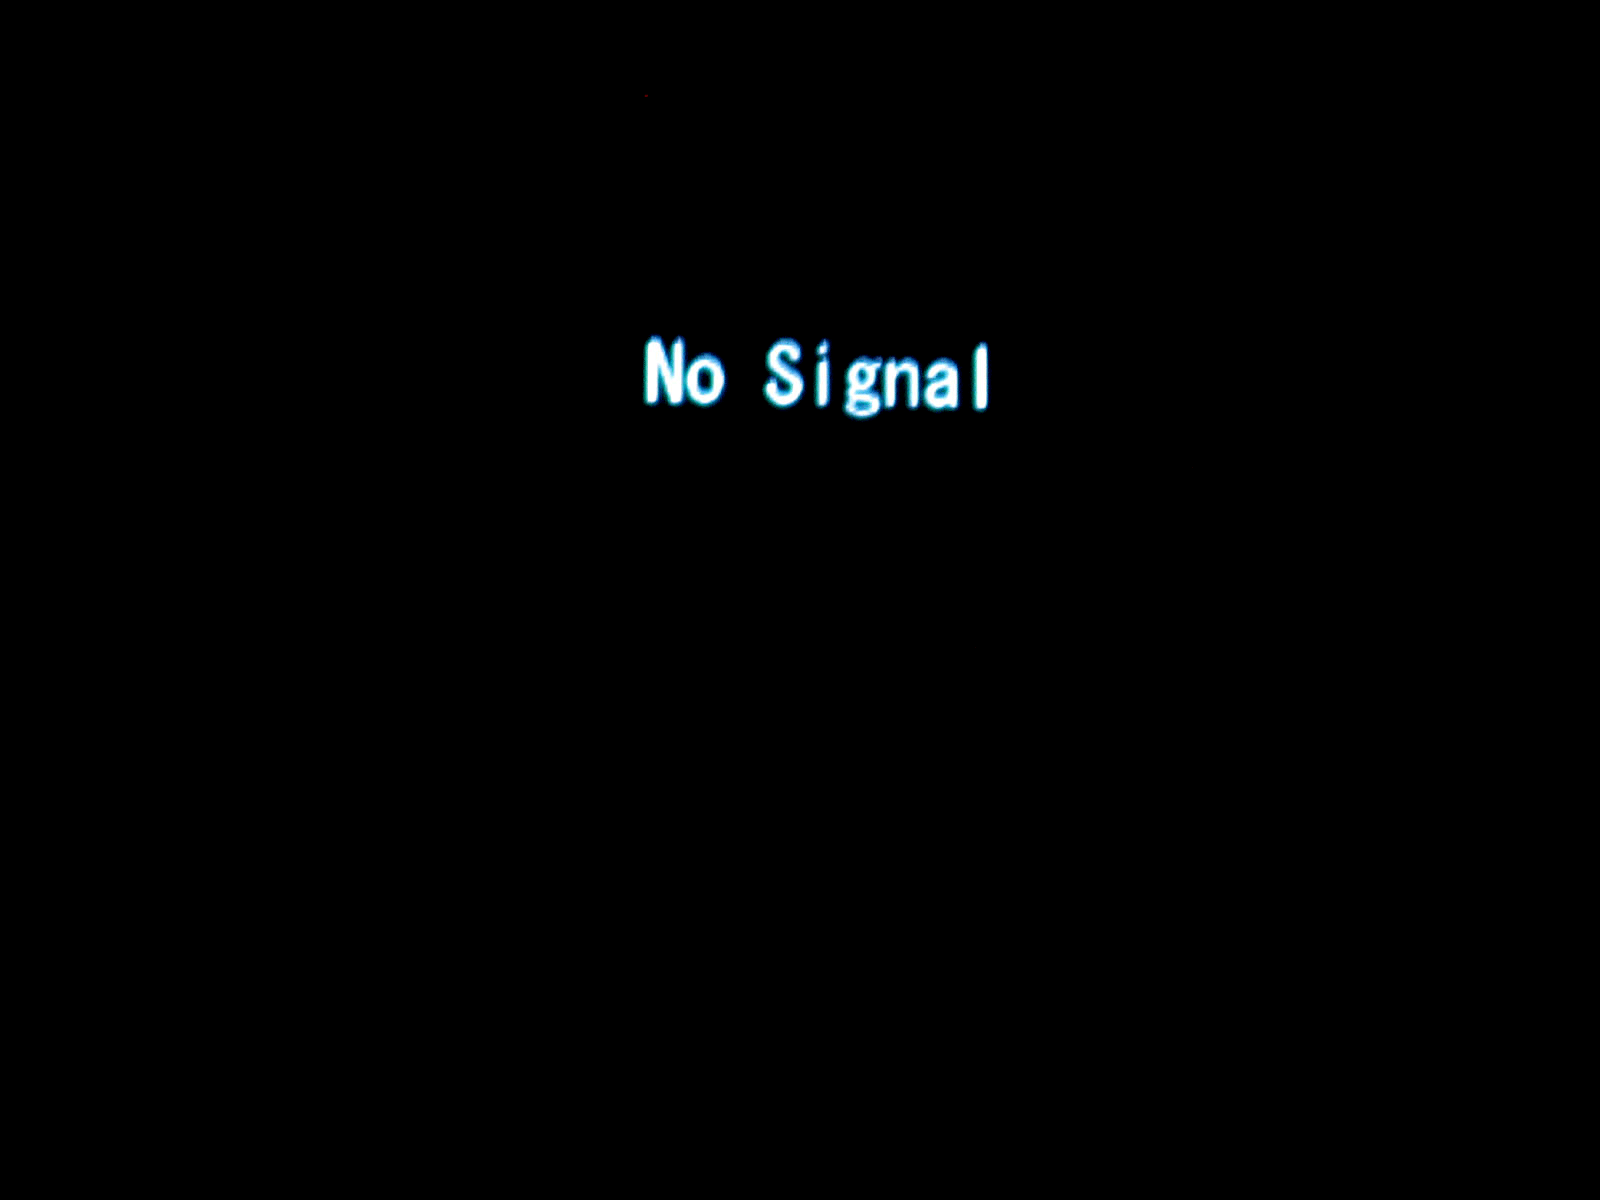 No Signal Signal Image, Picture, Photo, Icon